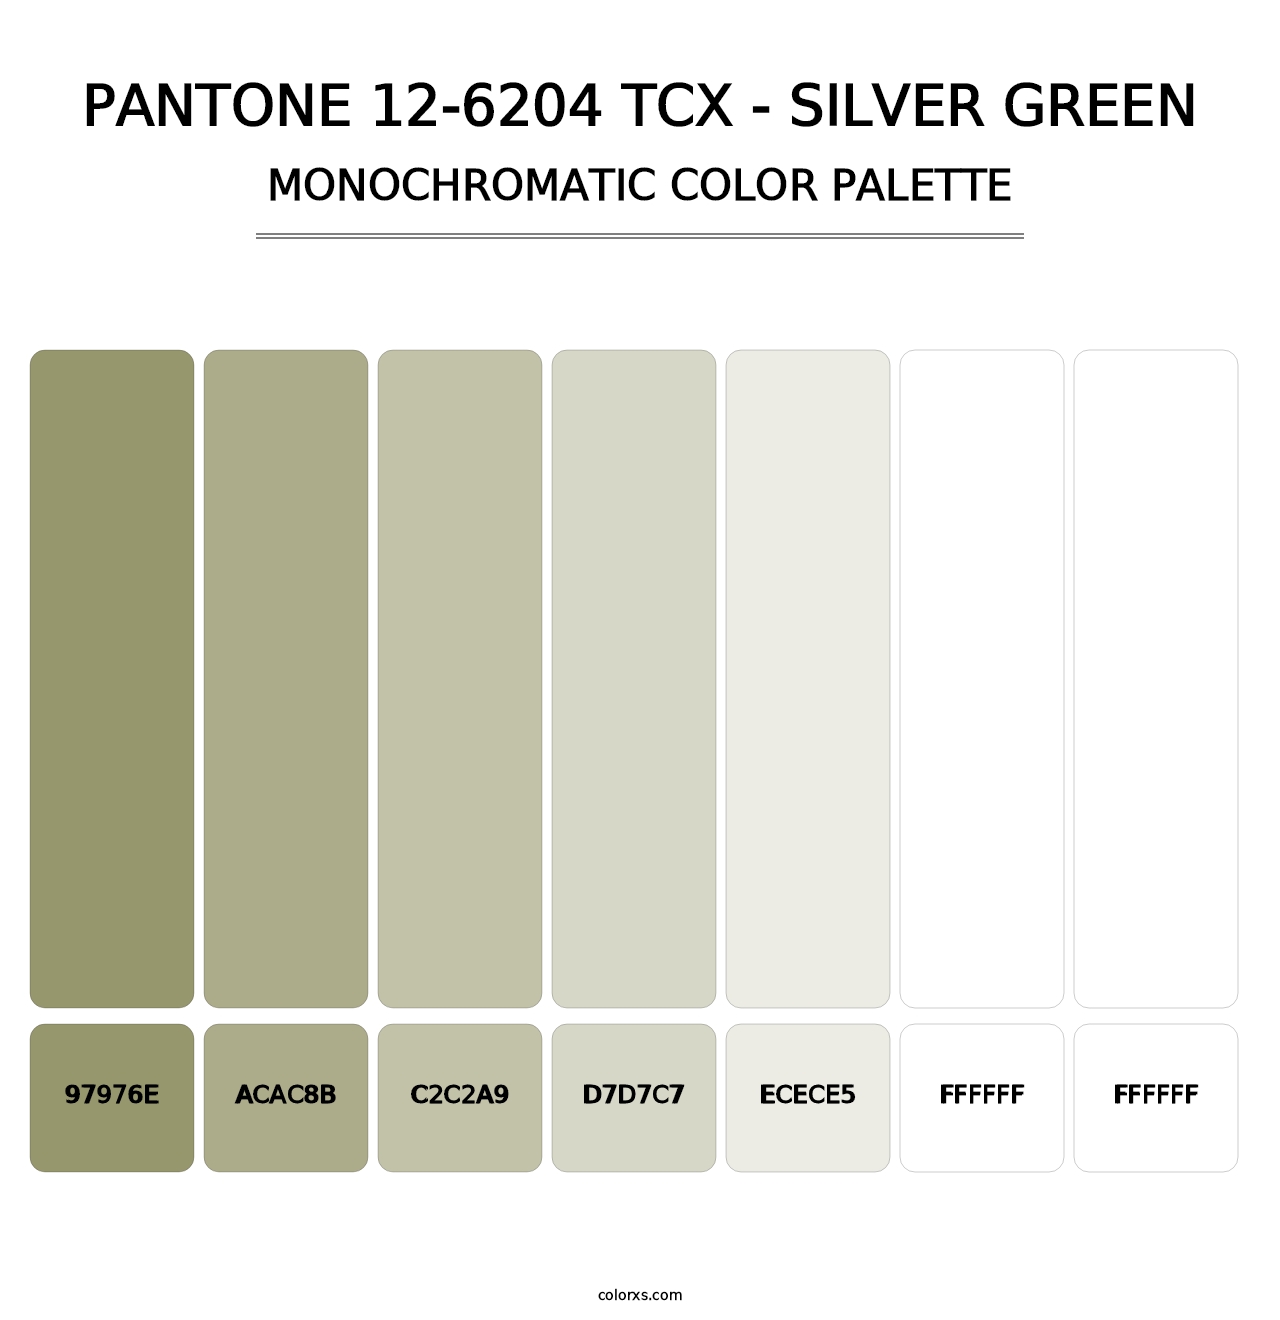 PANTONE 12-6204 TCX - Silver Green - Monochromatic Color Palette